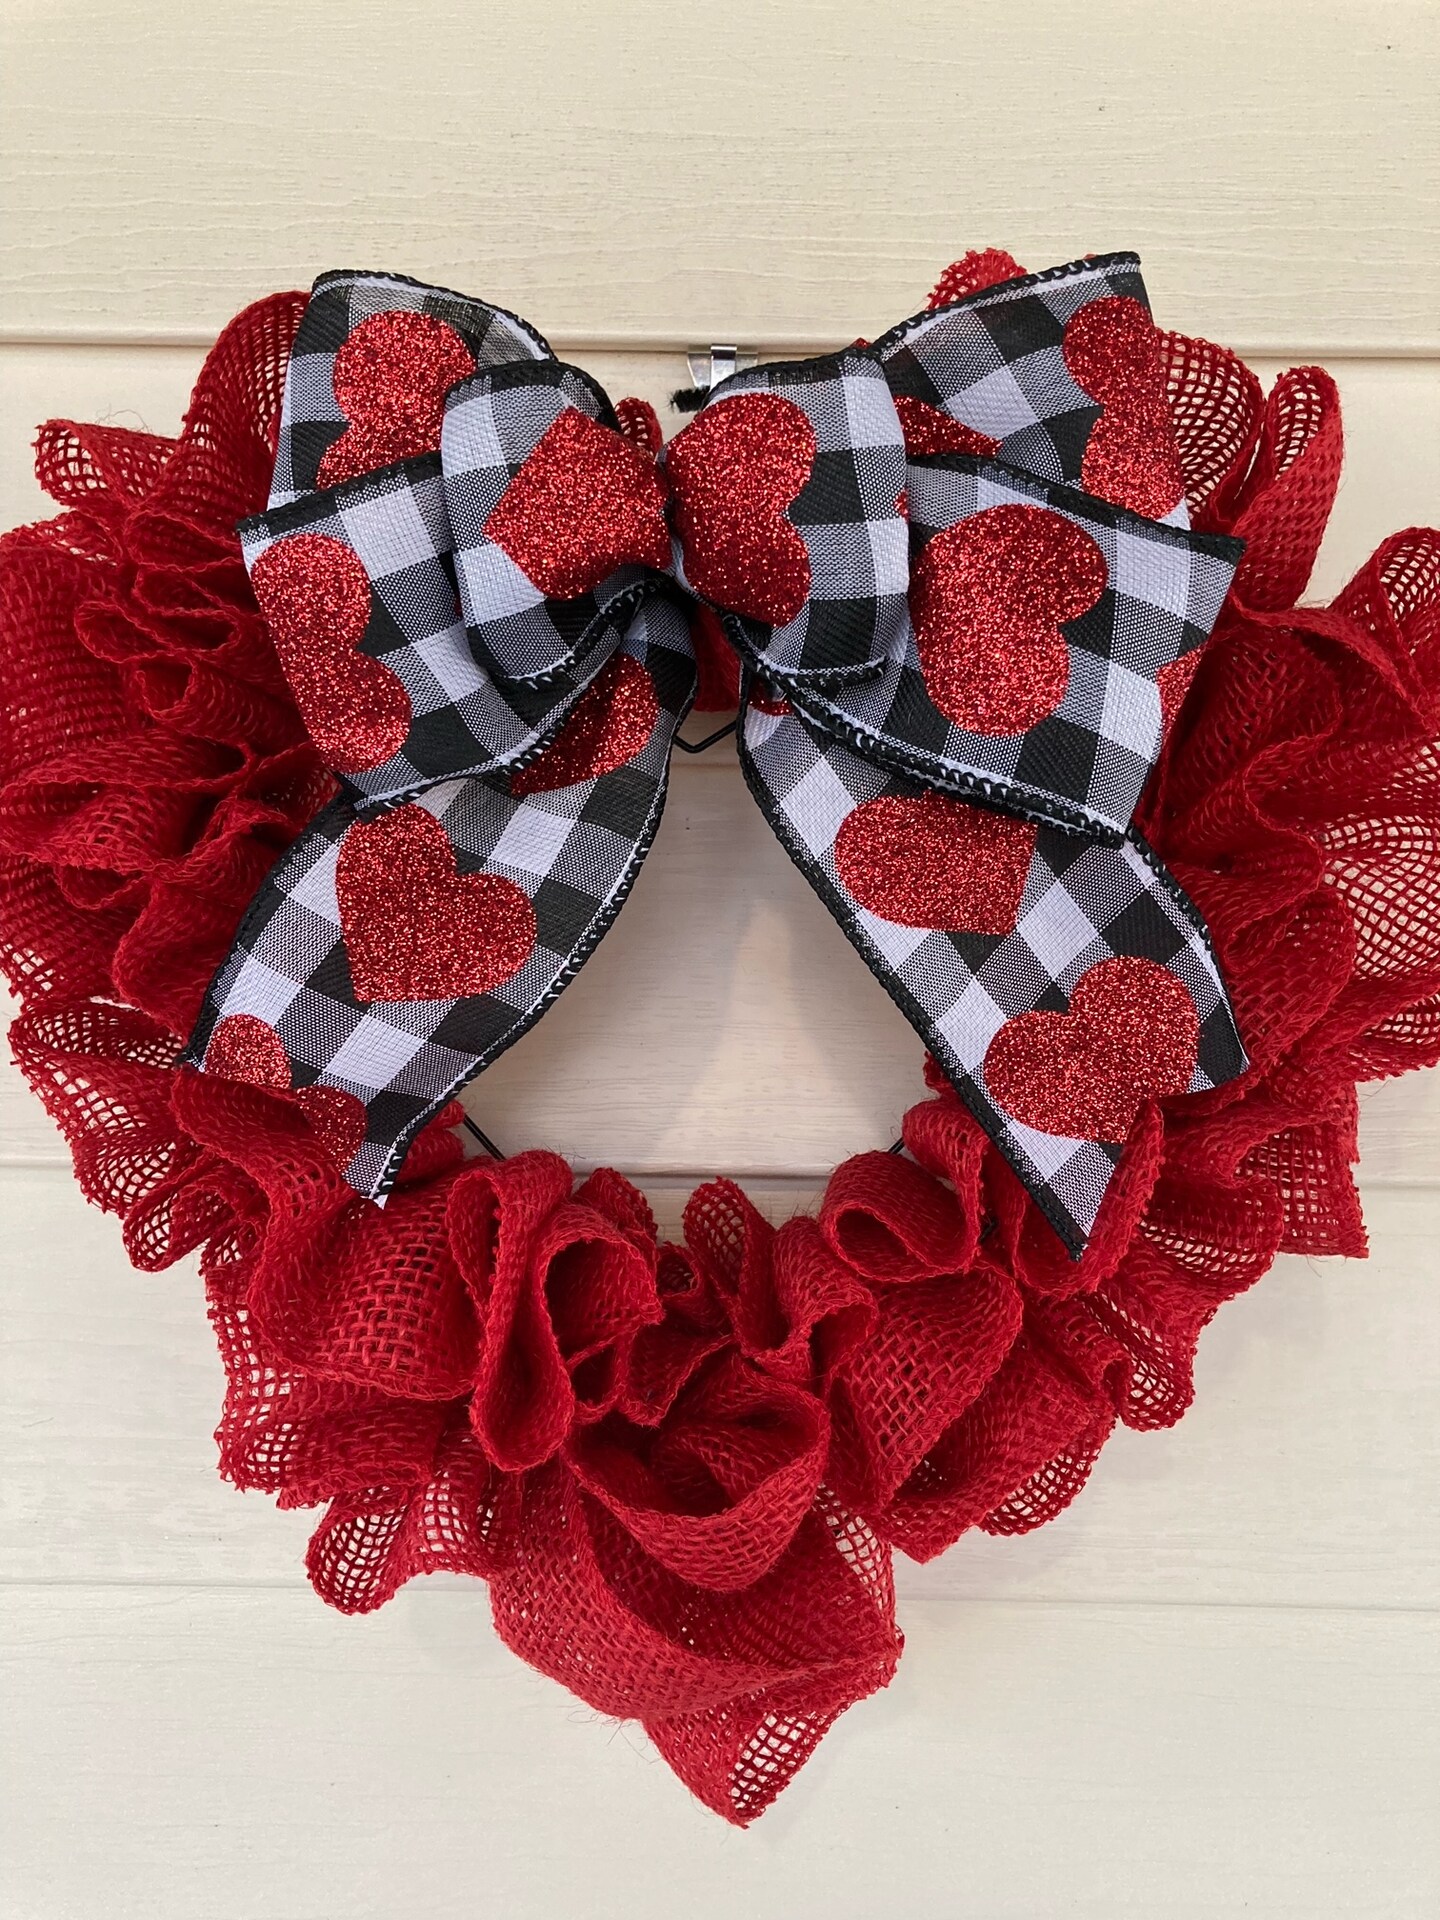 Chunky Knit Valentine Heart Wreath Workshop . Wednesday February 7 .  Hartman’s Distilling